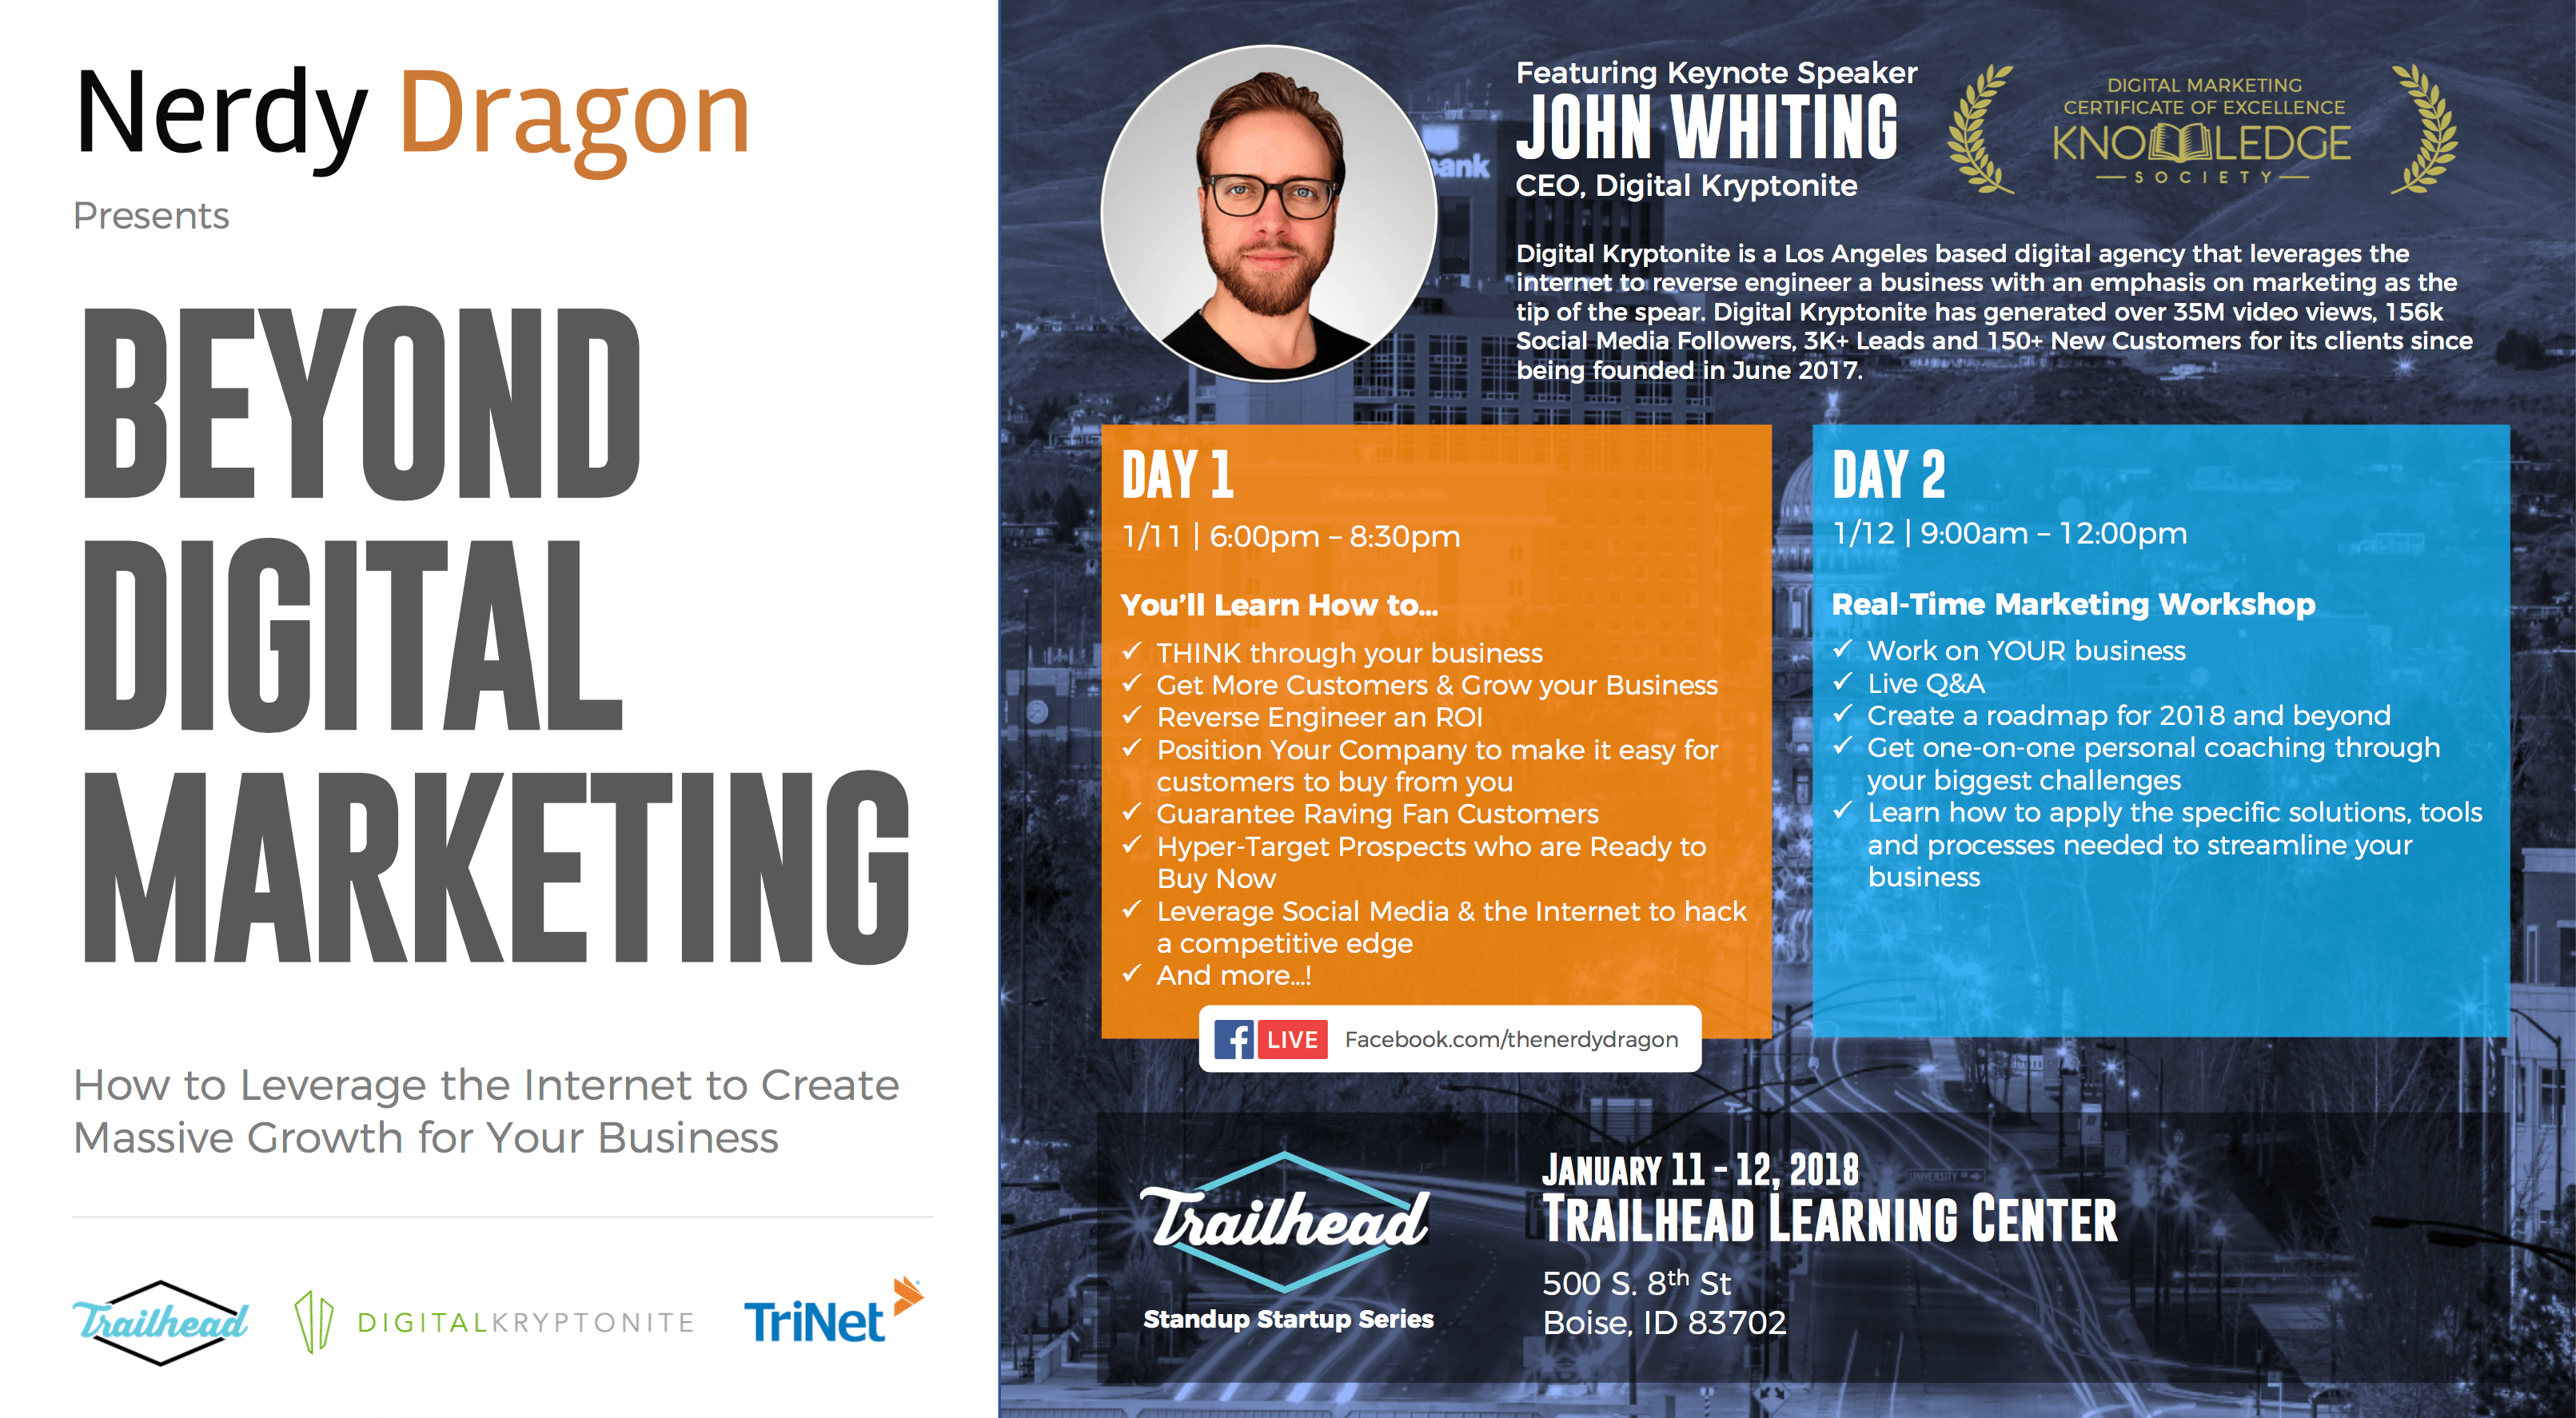 Beyond Digital Marketing - with John Whiting & Nerdy Dragon